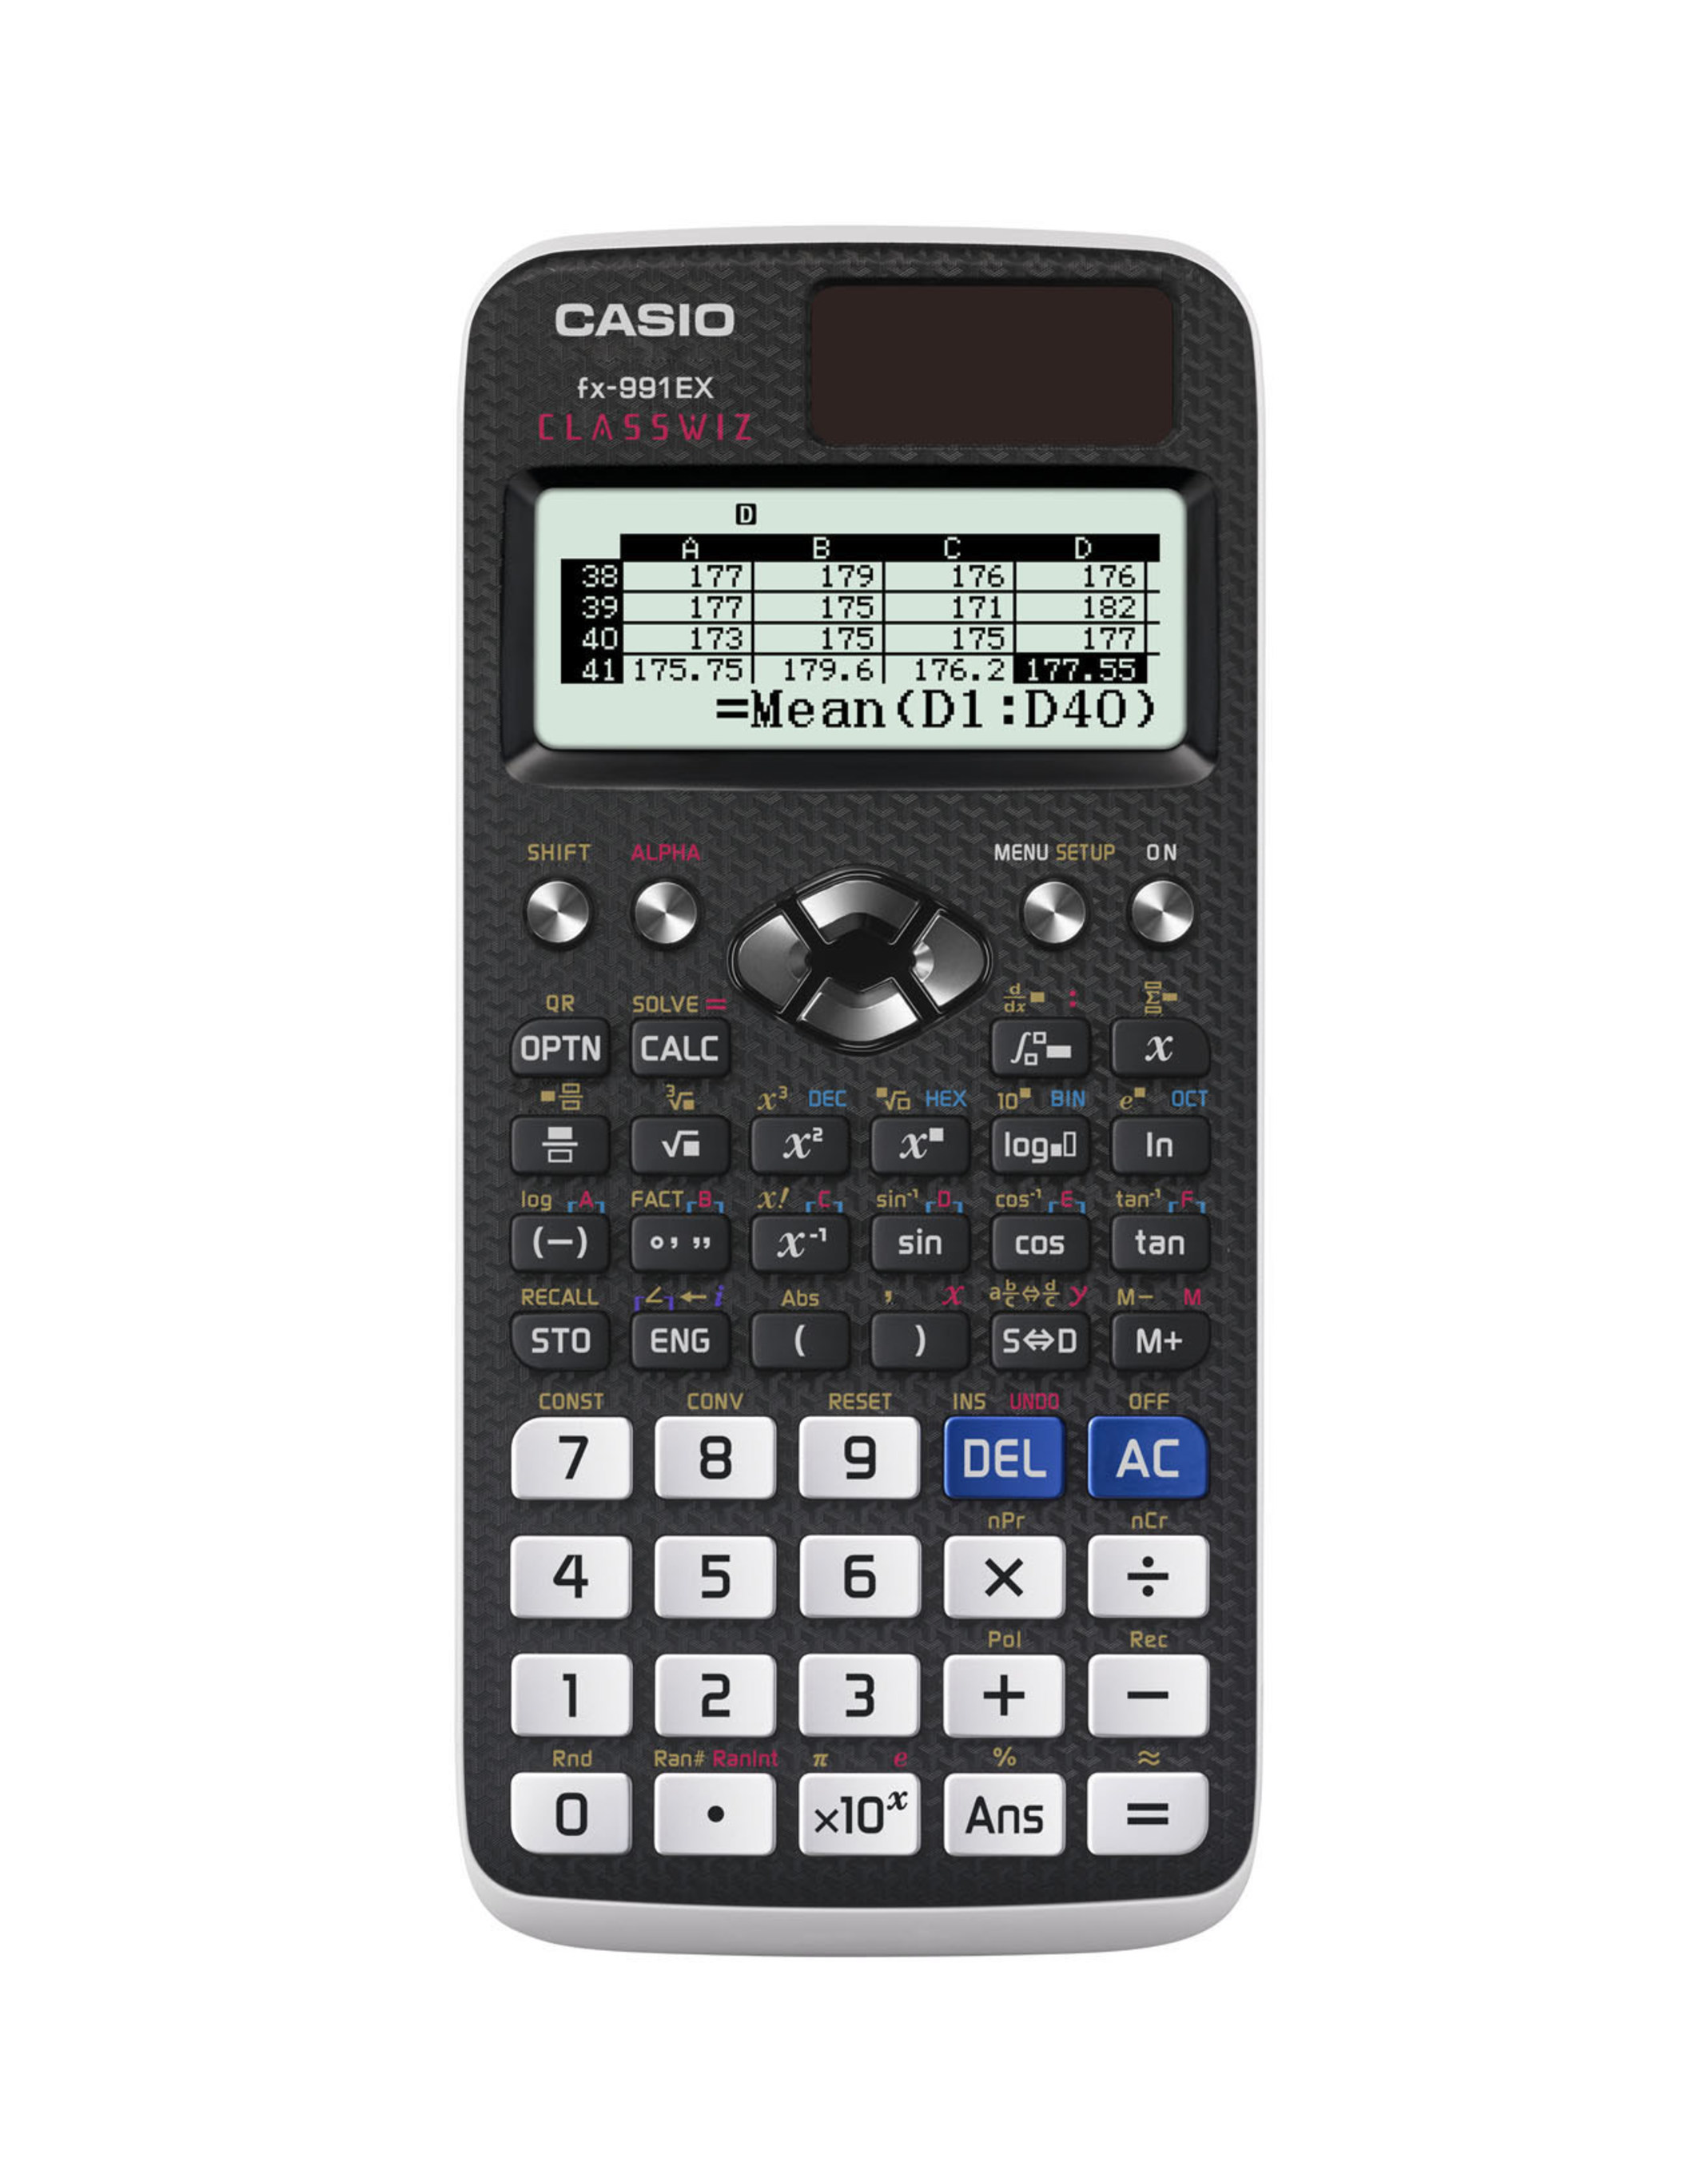 Casio Launches New Fx 991ex Scientific Calculator With Spreadsheet